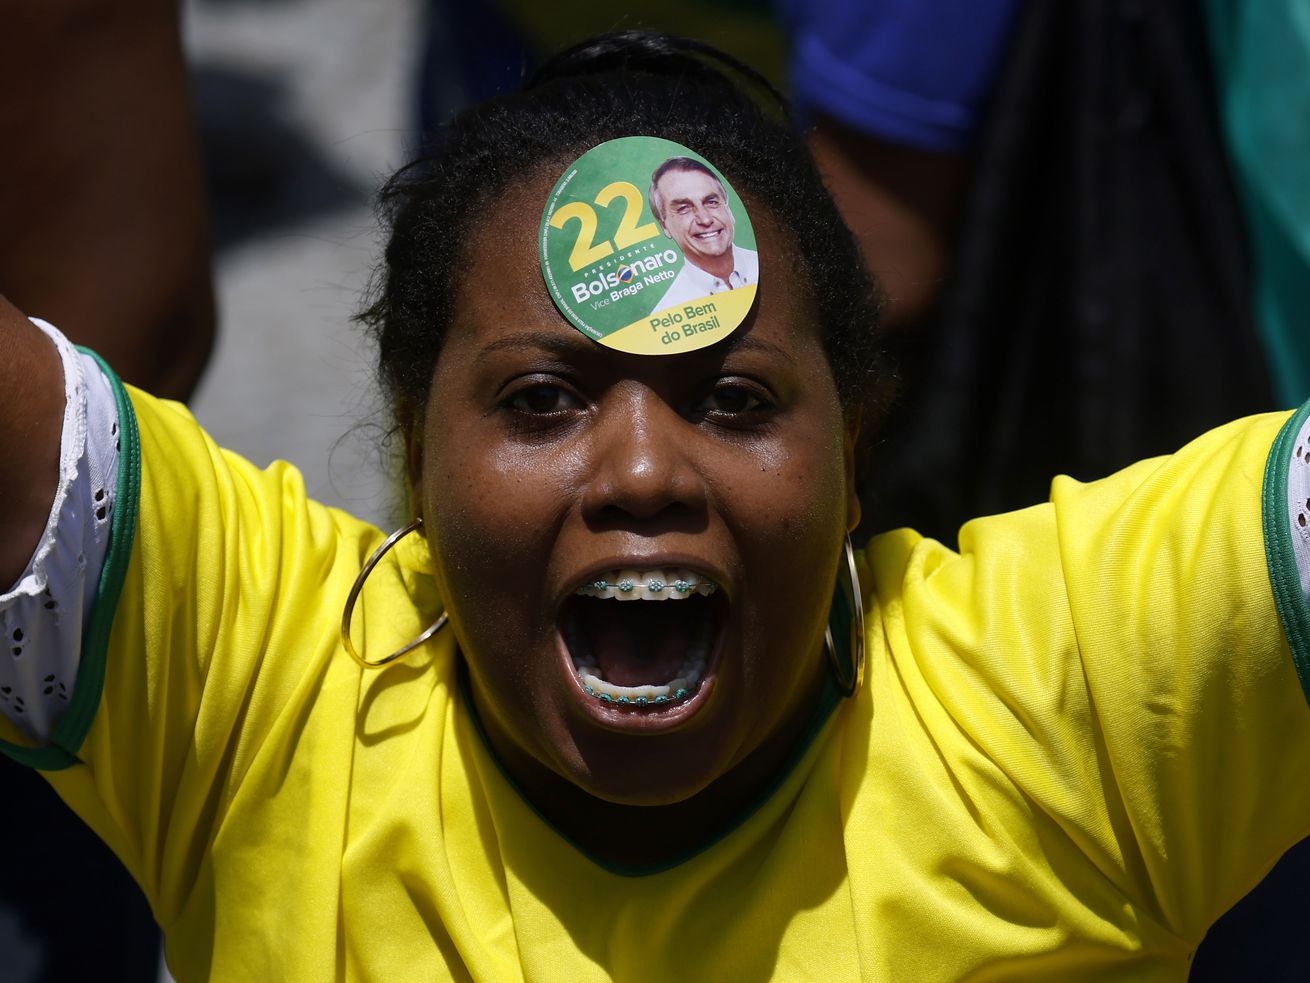 Who would make Bolsonaro president once more?